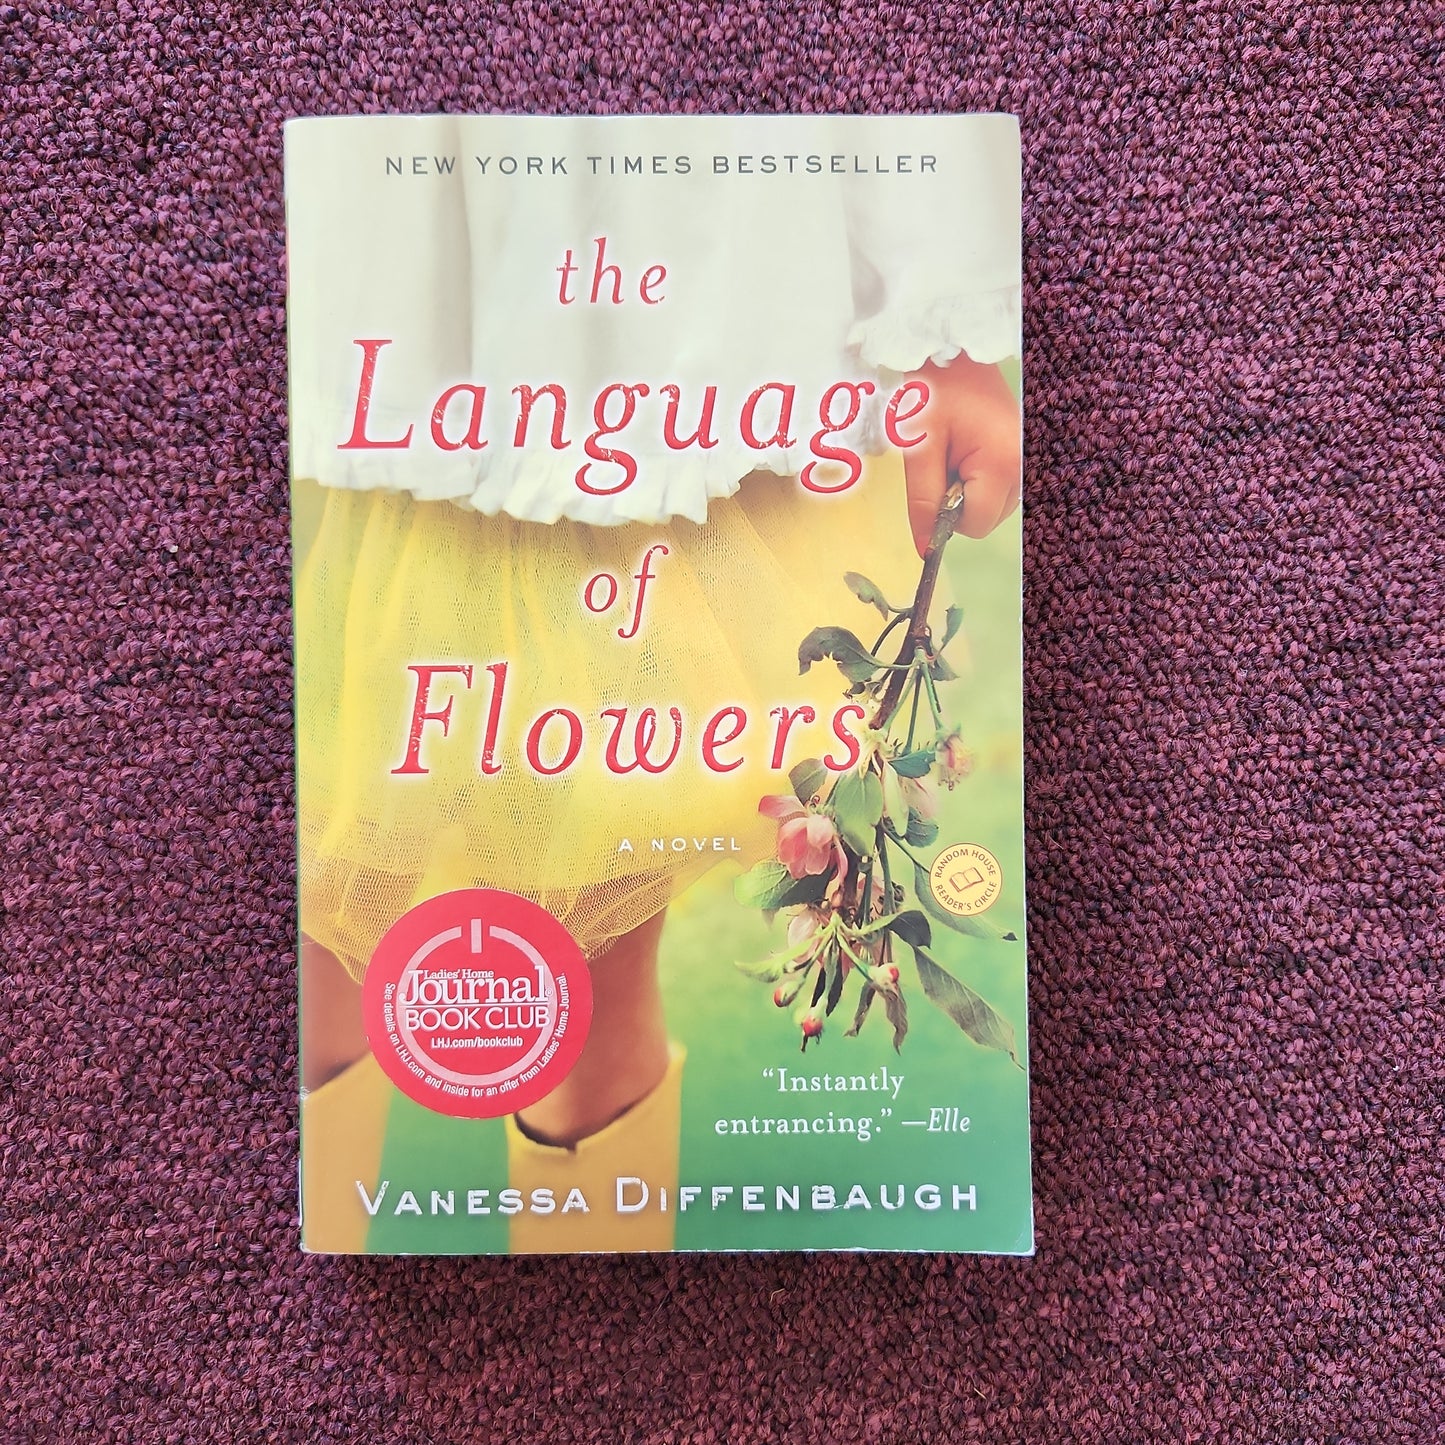 The Language of Flowers: A Novel